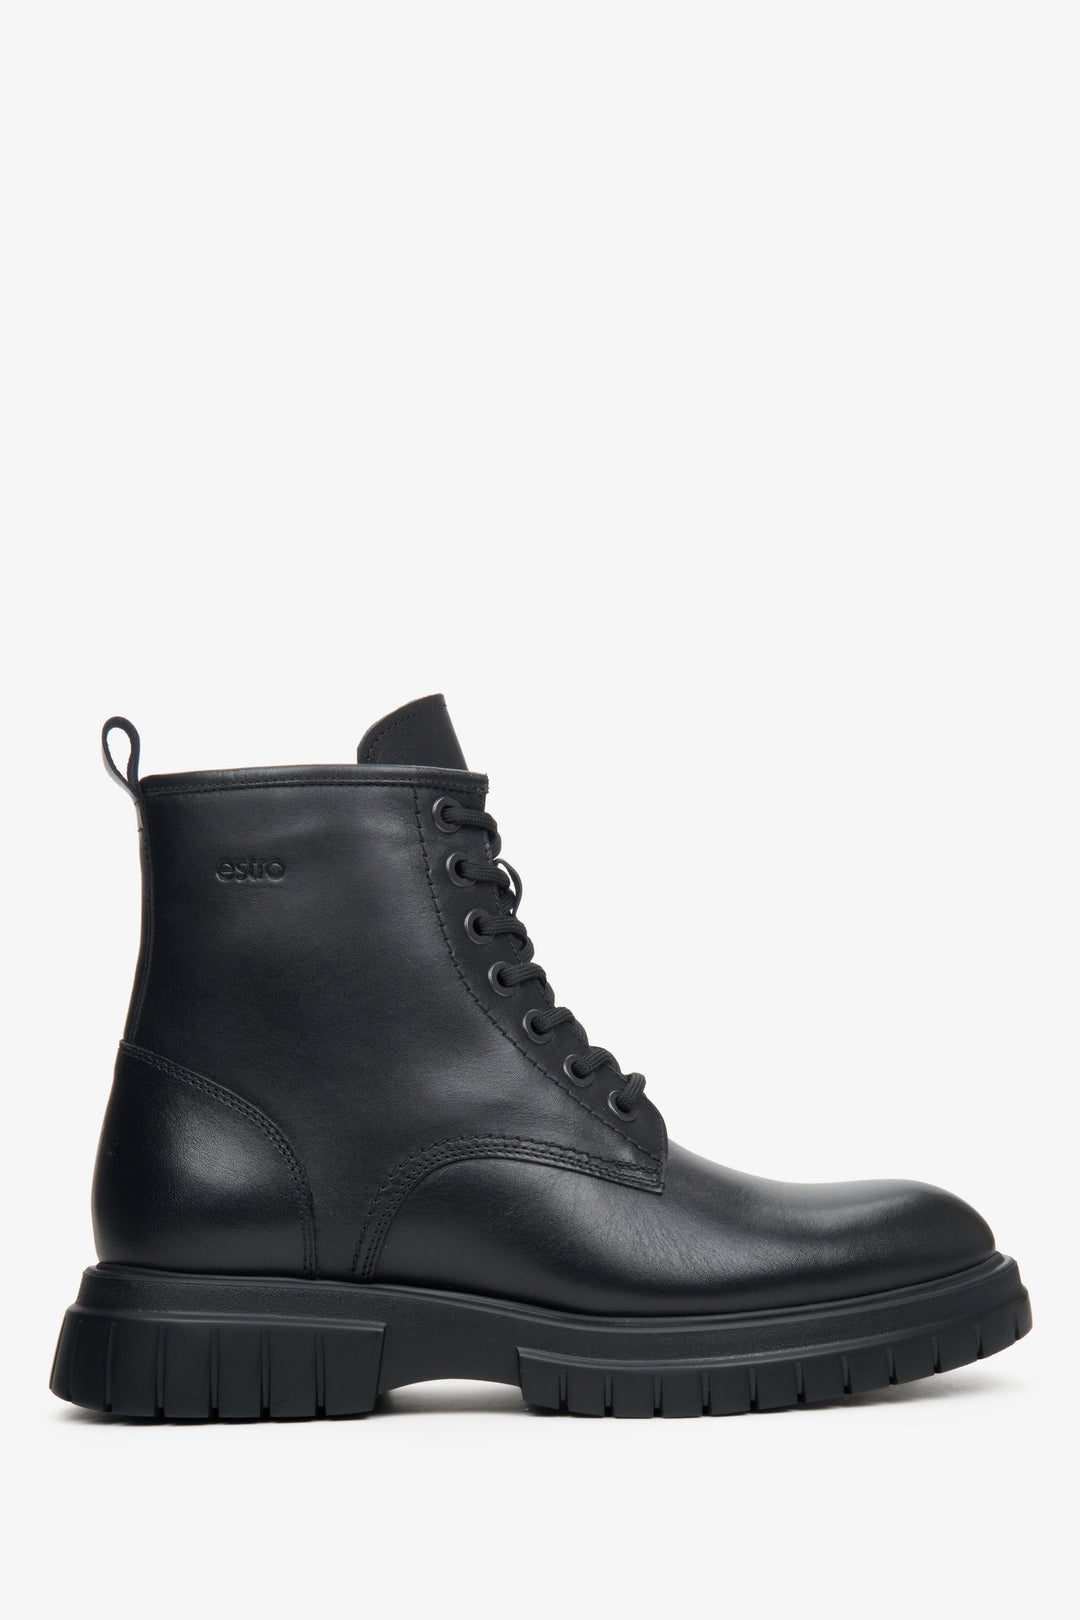 Men's Black Ankle Boots made of Genuine Leather for Winter Estro ER00114071.